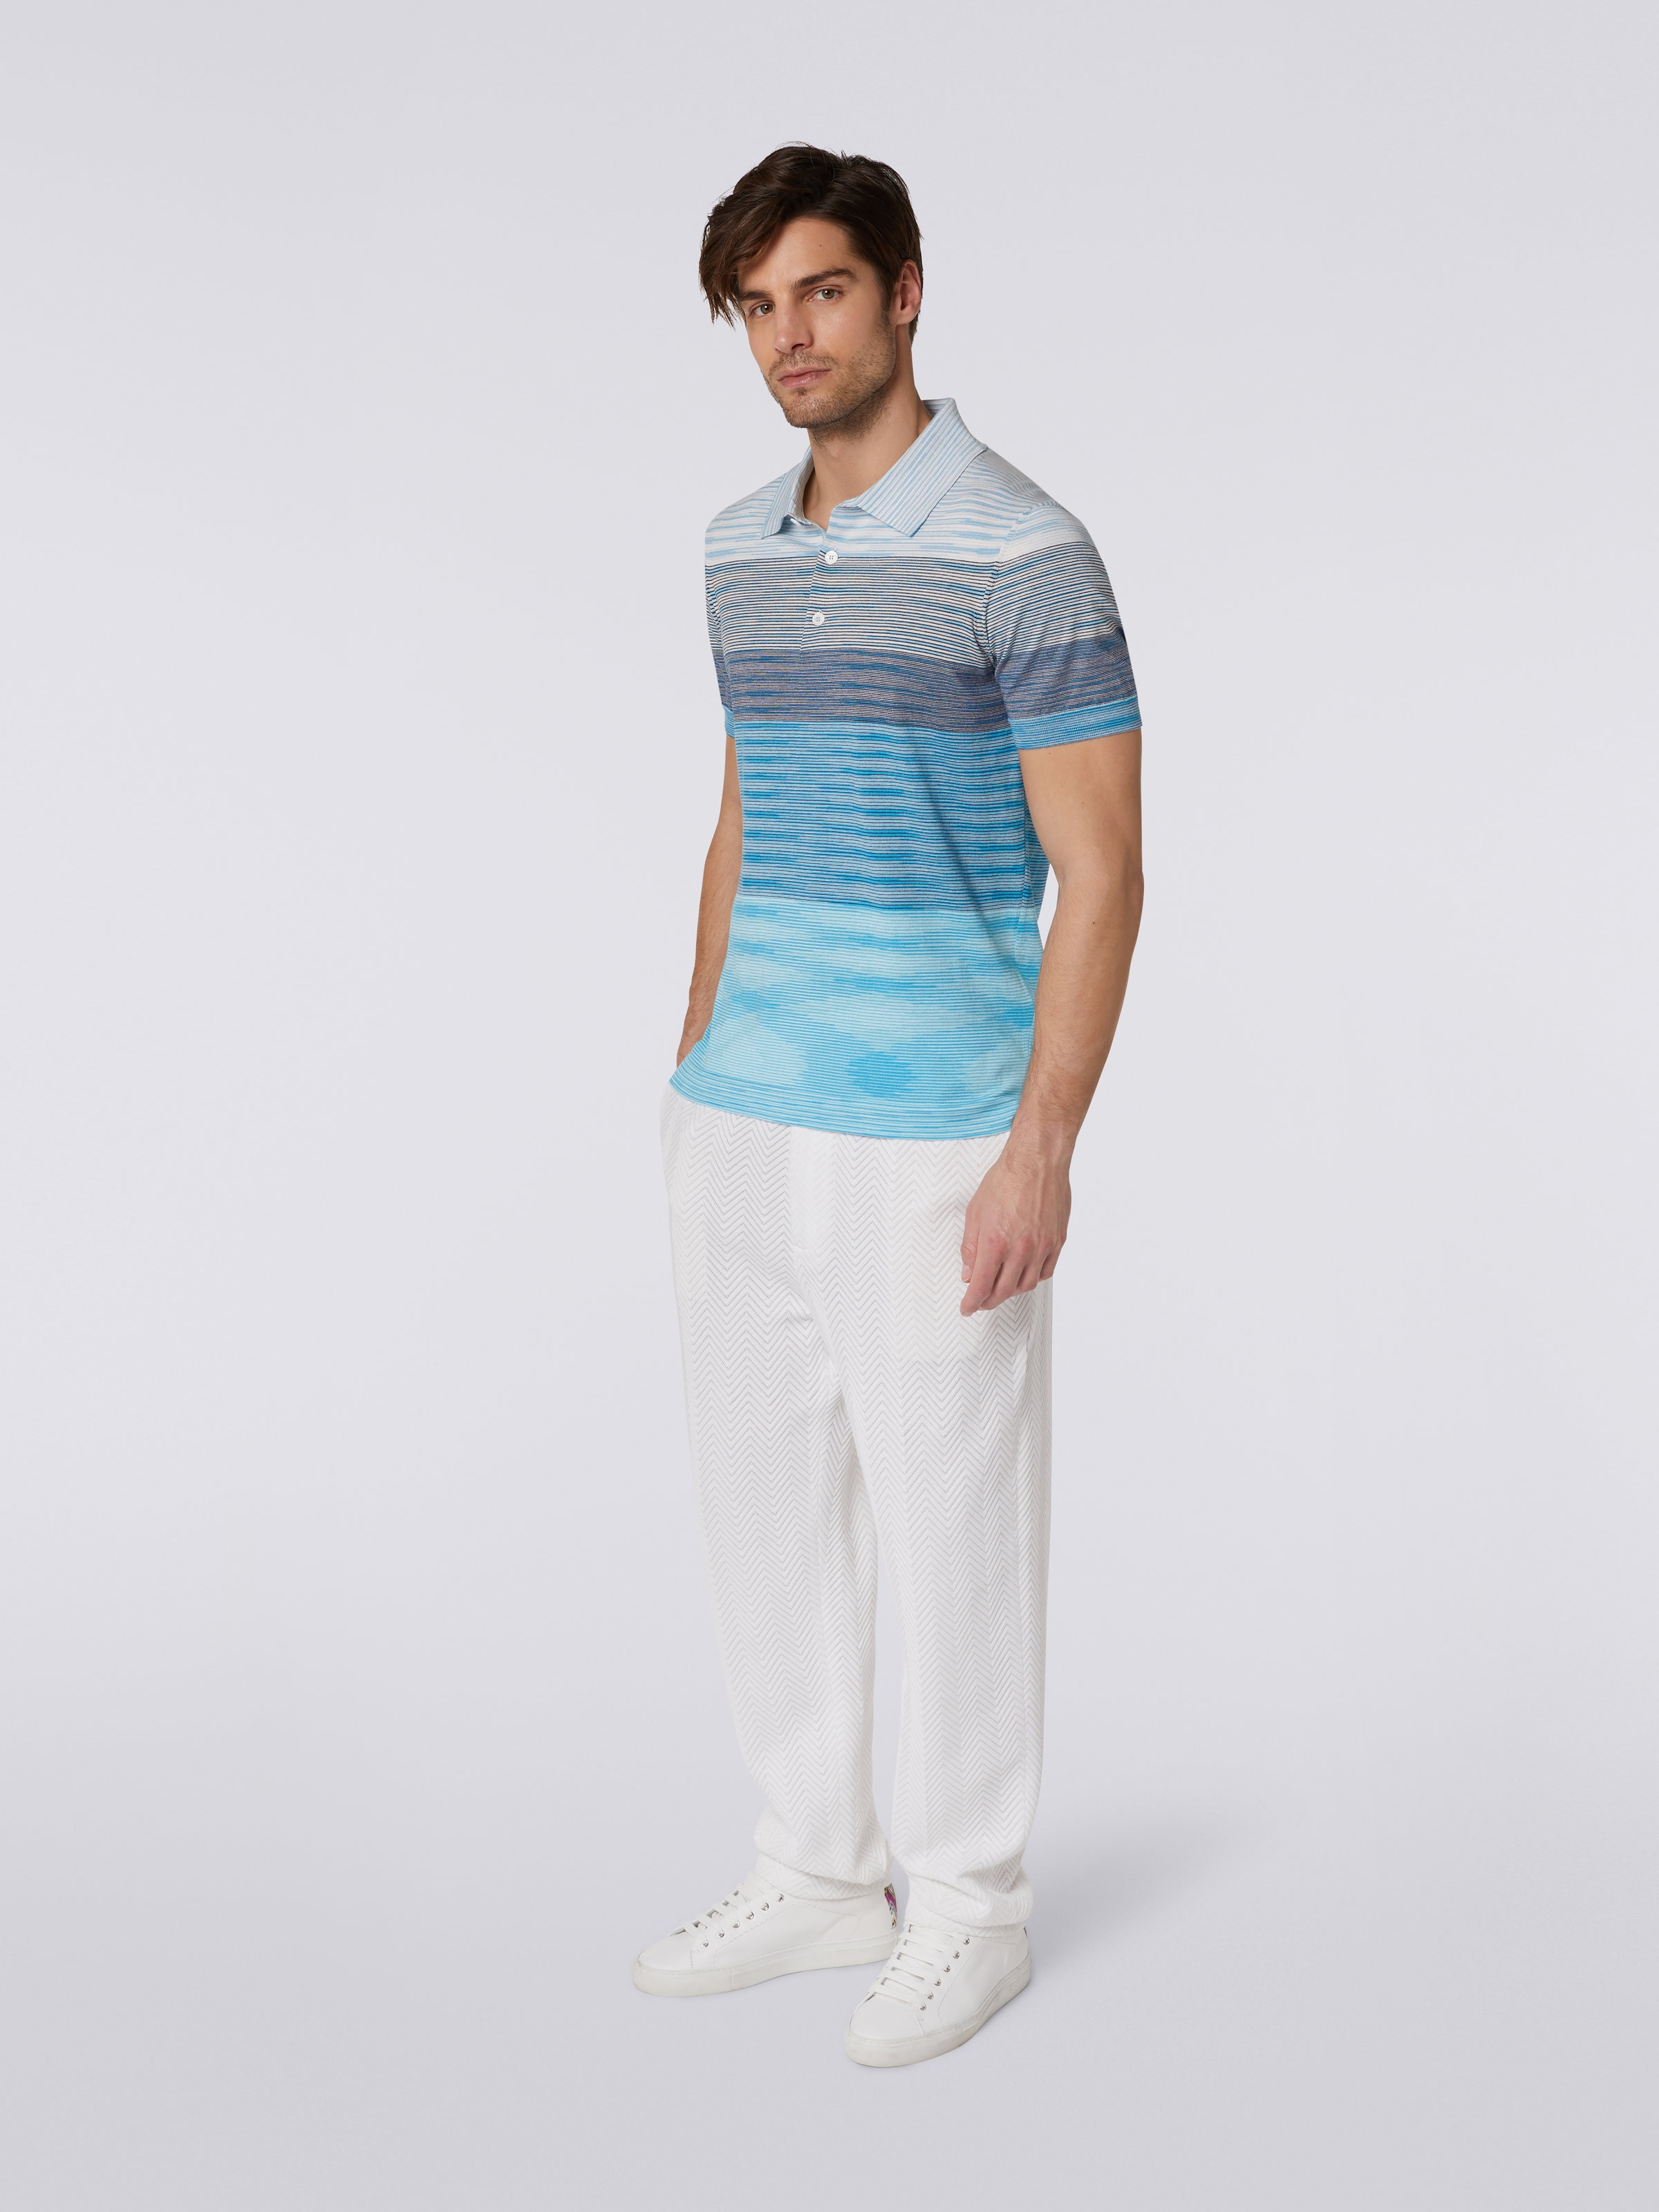 Kurzärmeliges Poloshirt aus gestreifter Baumwolle mit Dégradé-Effekt, Weiß & Hellblau - 2